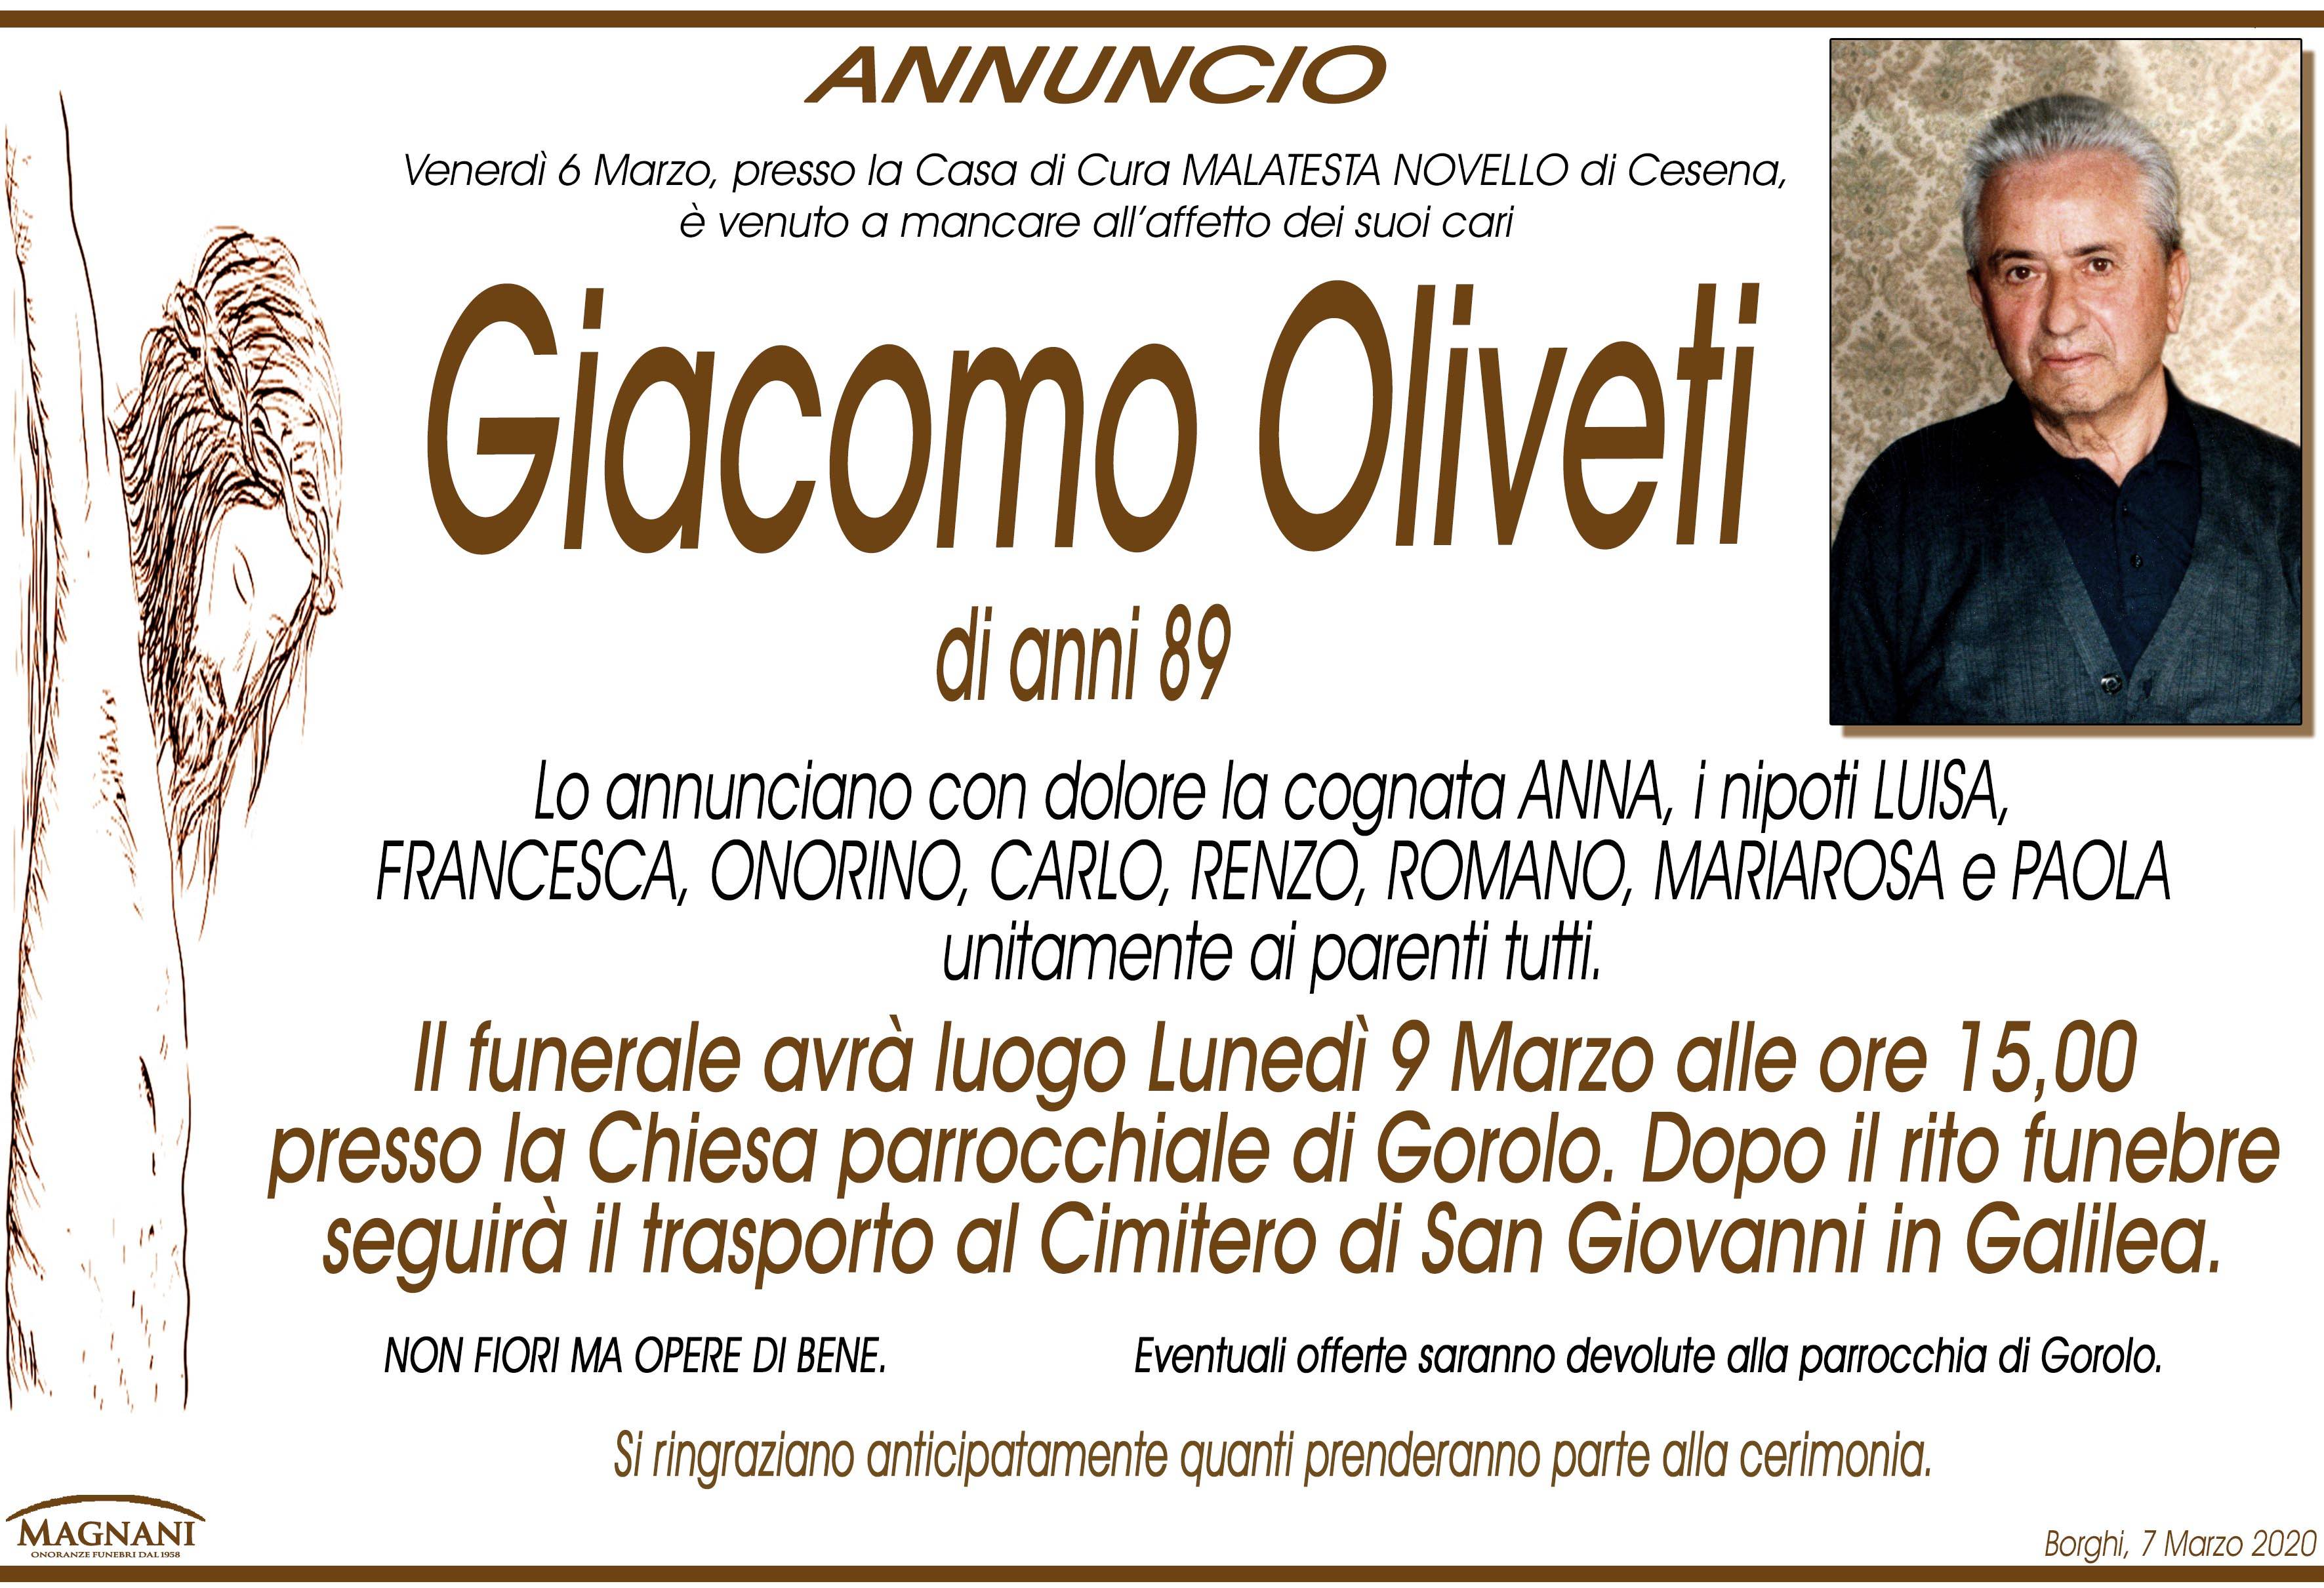 Giacomo Oliveti